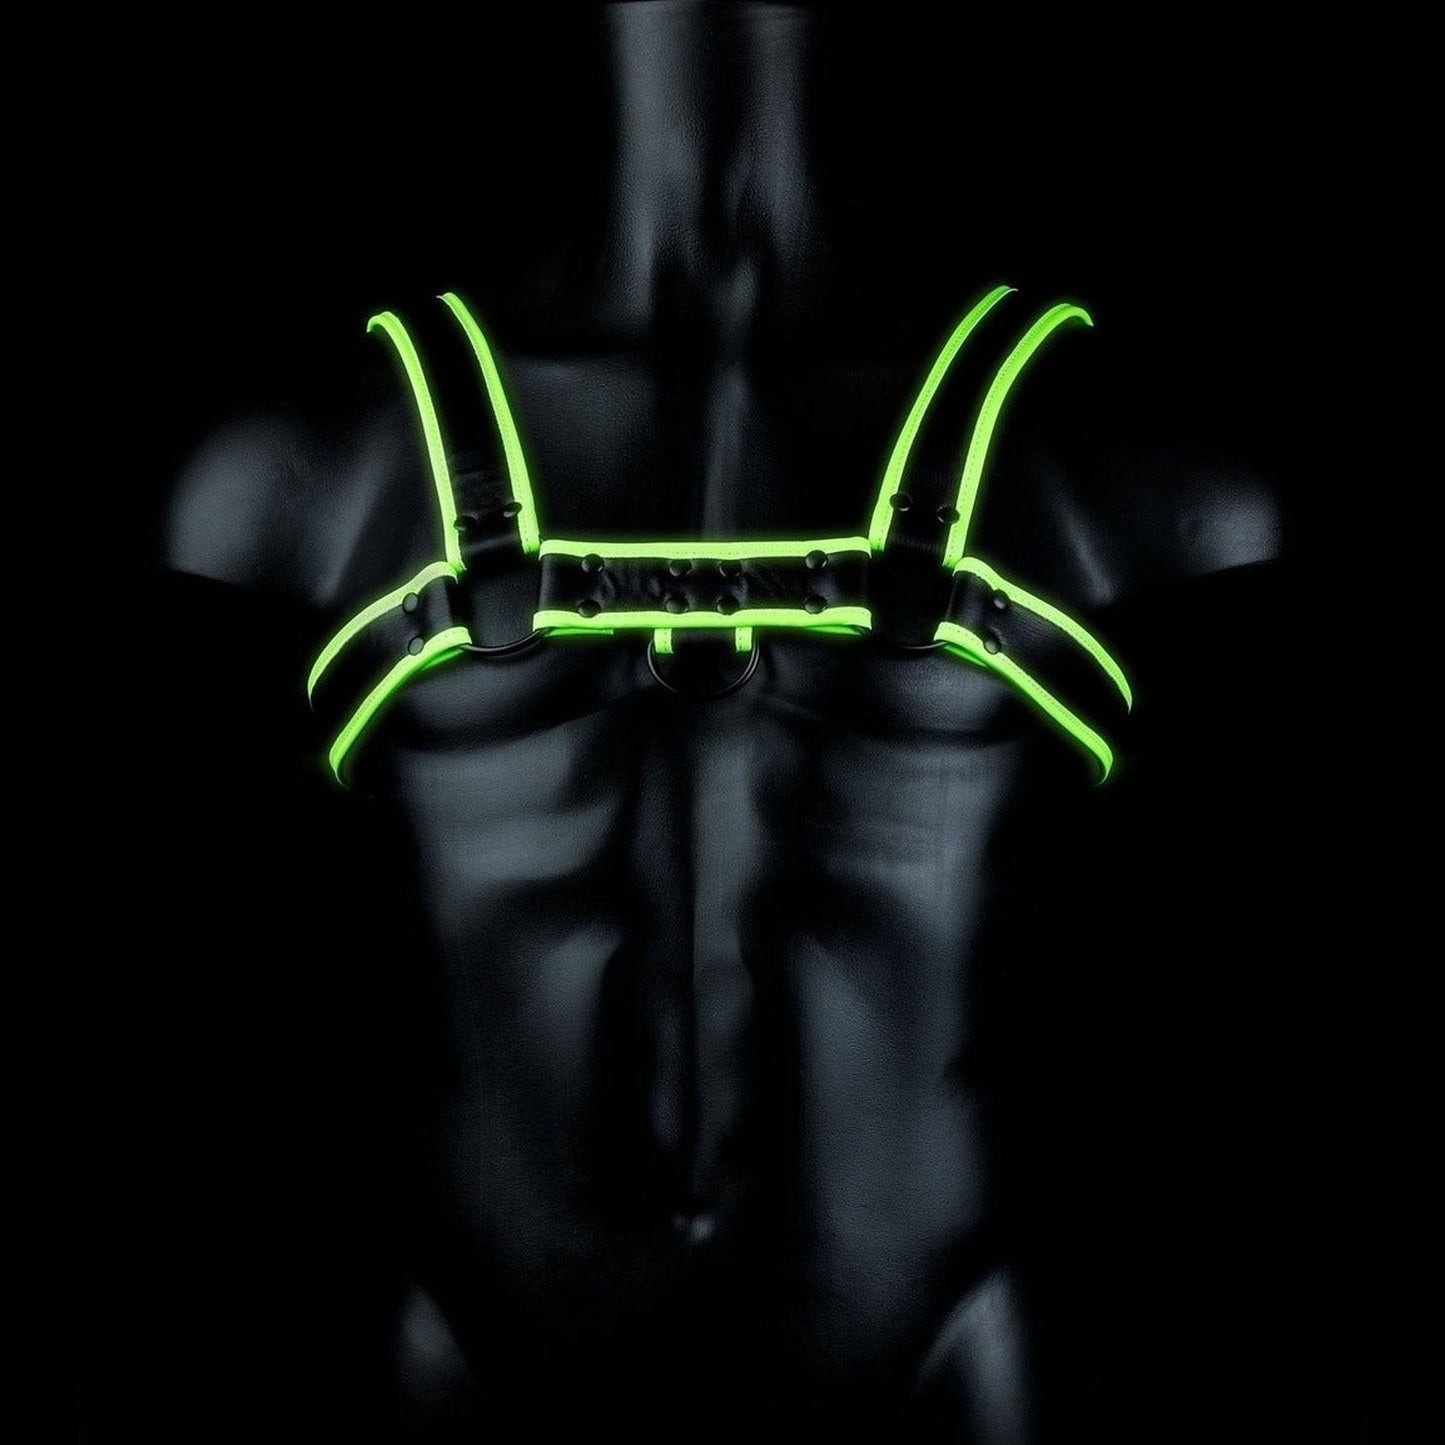 Chest Bulldog Harness  - GitD - Neon Green/Black - L/XL Ouch!